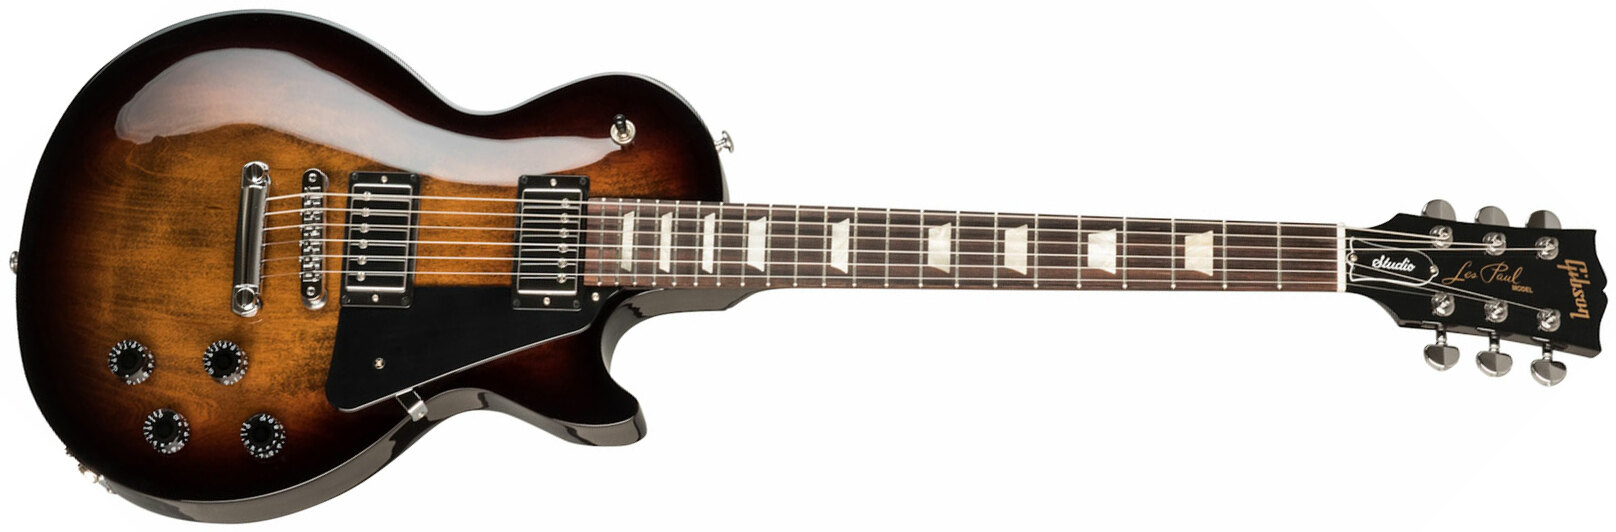 Gibson Les Paul Studio Modern 2h Ht Rw - Smokehouse Burst - Guitarra eléctrica de corte único. - Main picture